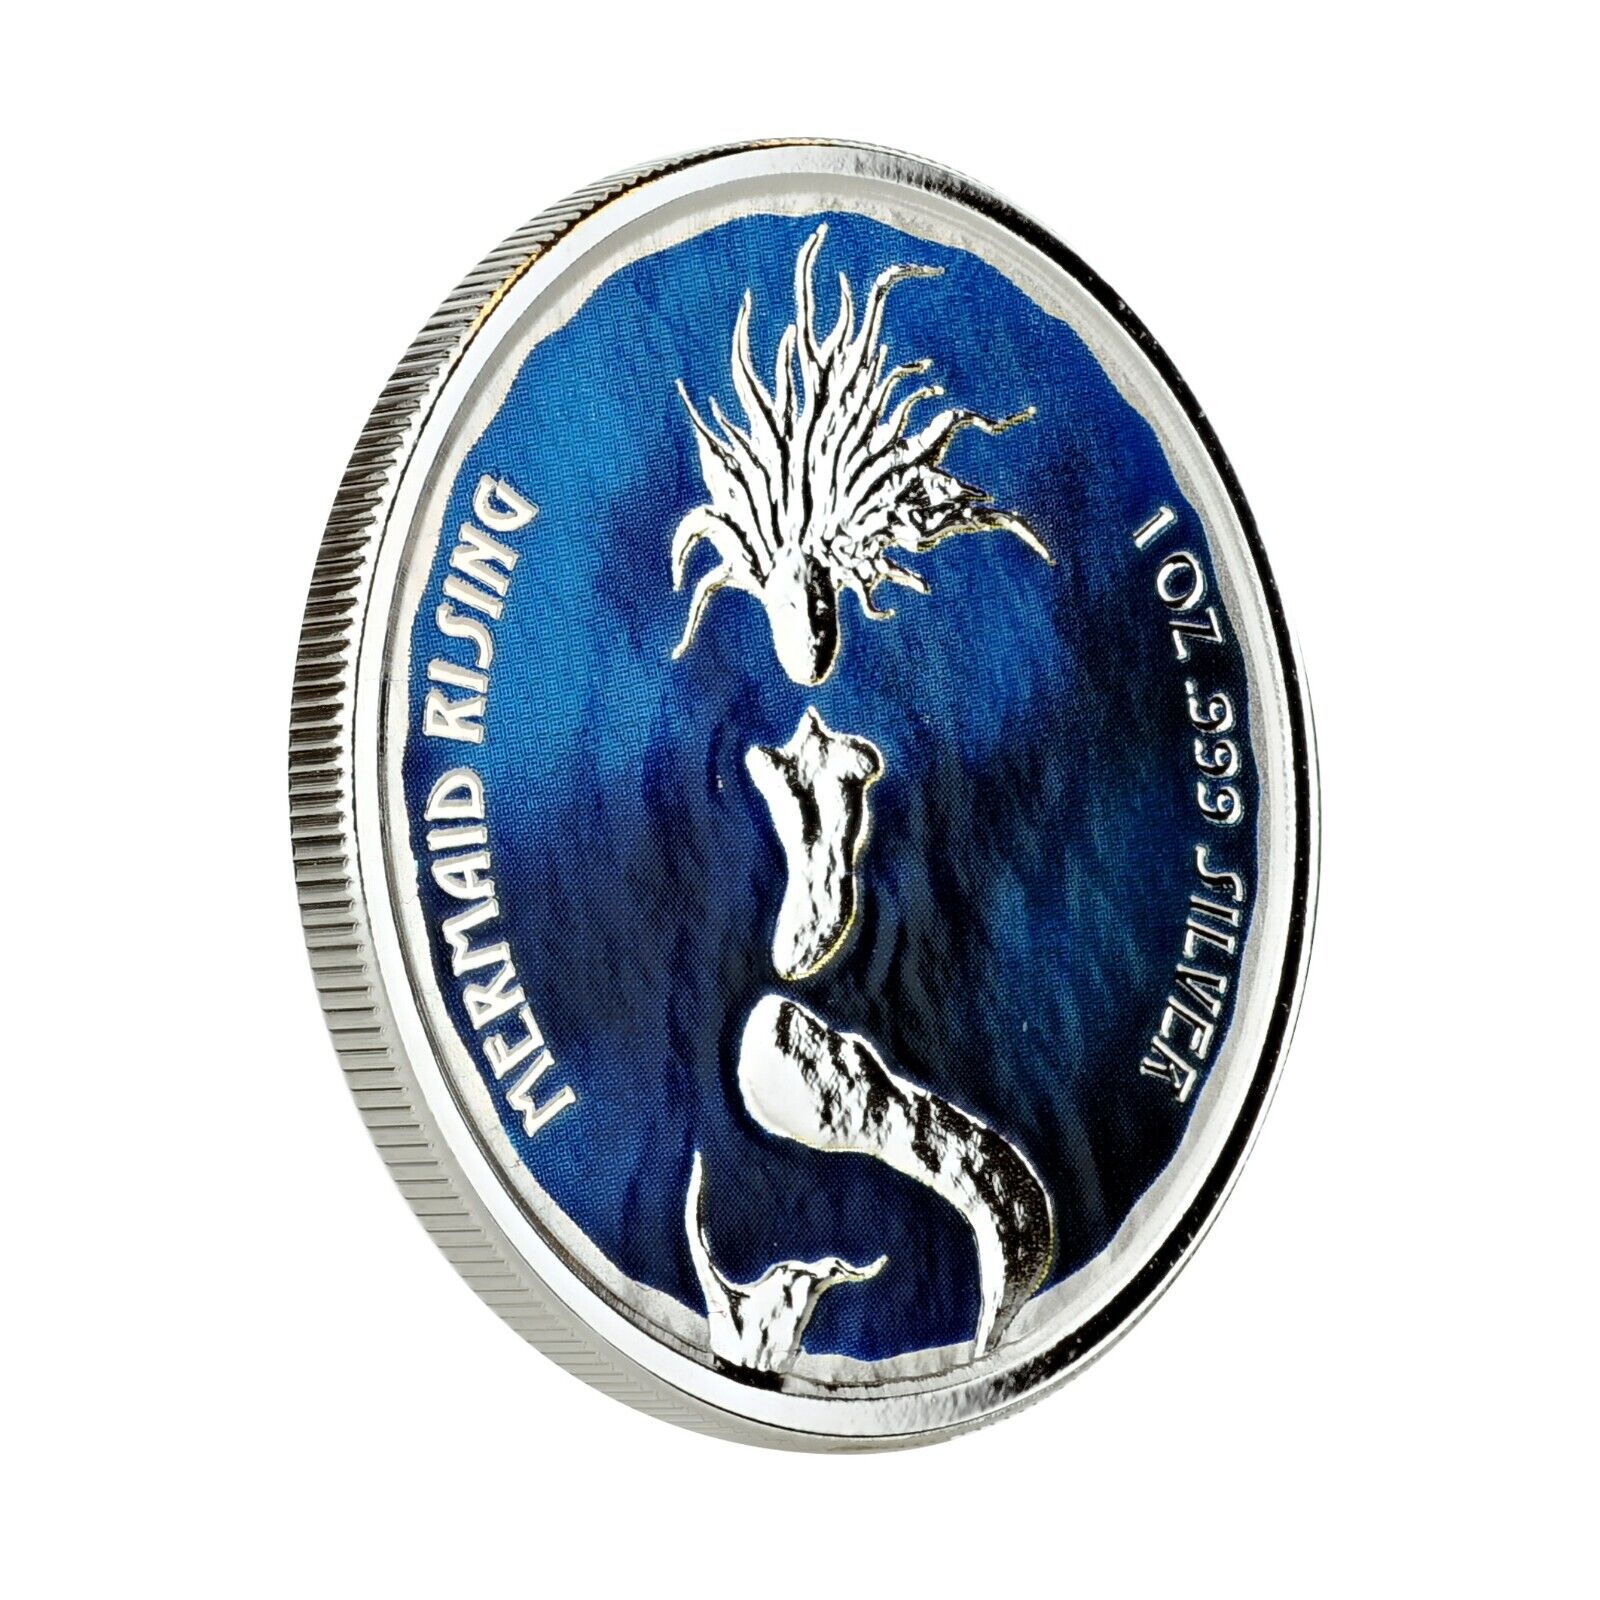 1 Oz Silver Coin 2018 Fiji $1 Scottsdale Mint Color - Mermaid Rising-classypw.com-1